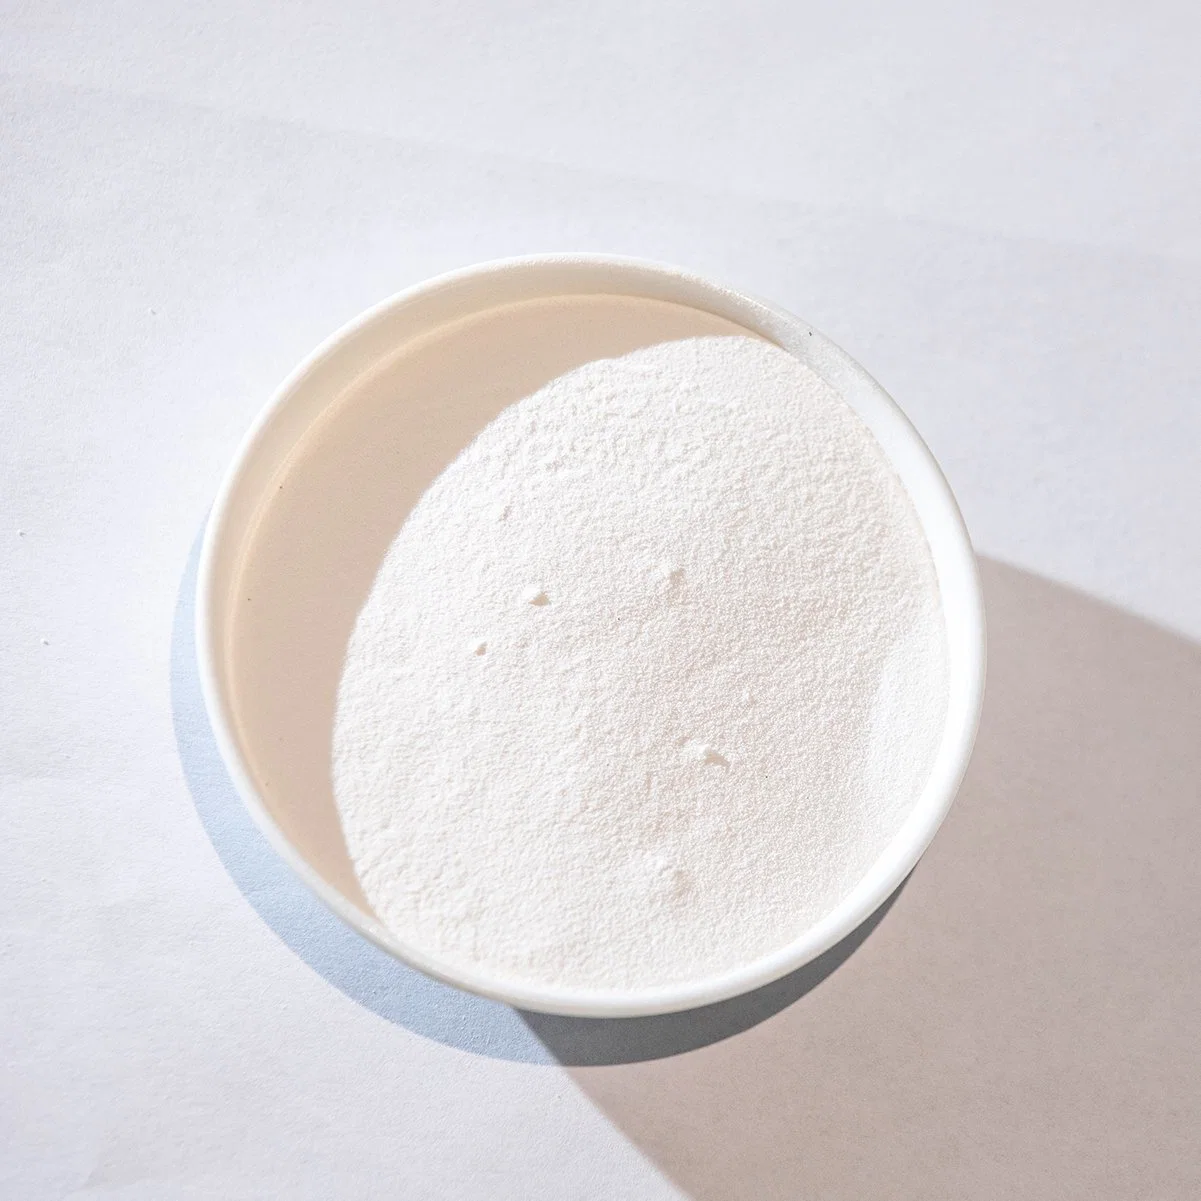 Silk Amino Acids White Powder Cosmetics Products Skin Care Raw Material